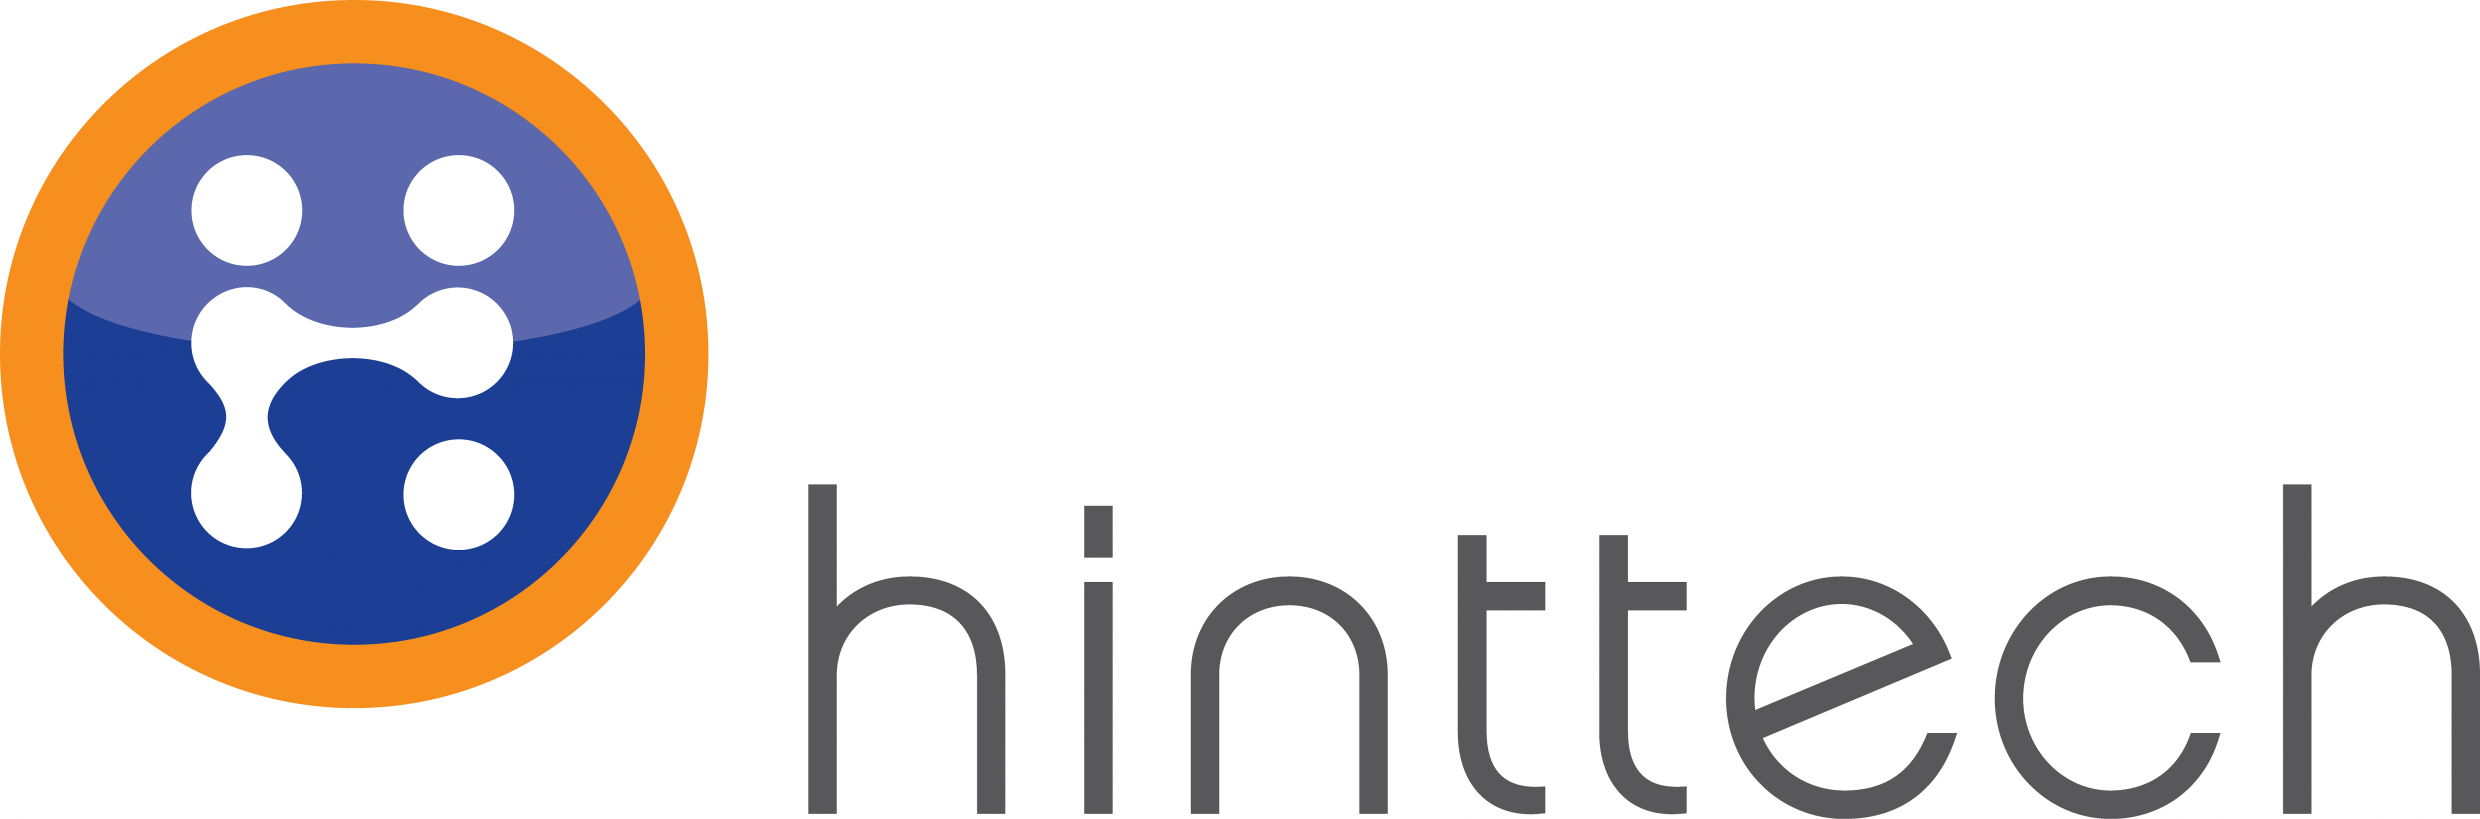 Logo_Hinttech_staffing_def.png